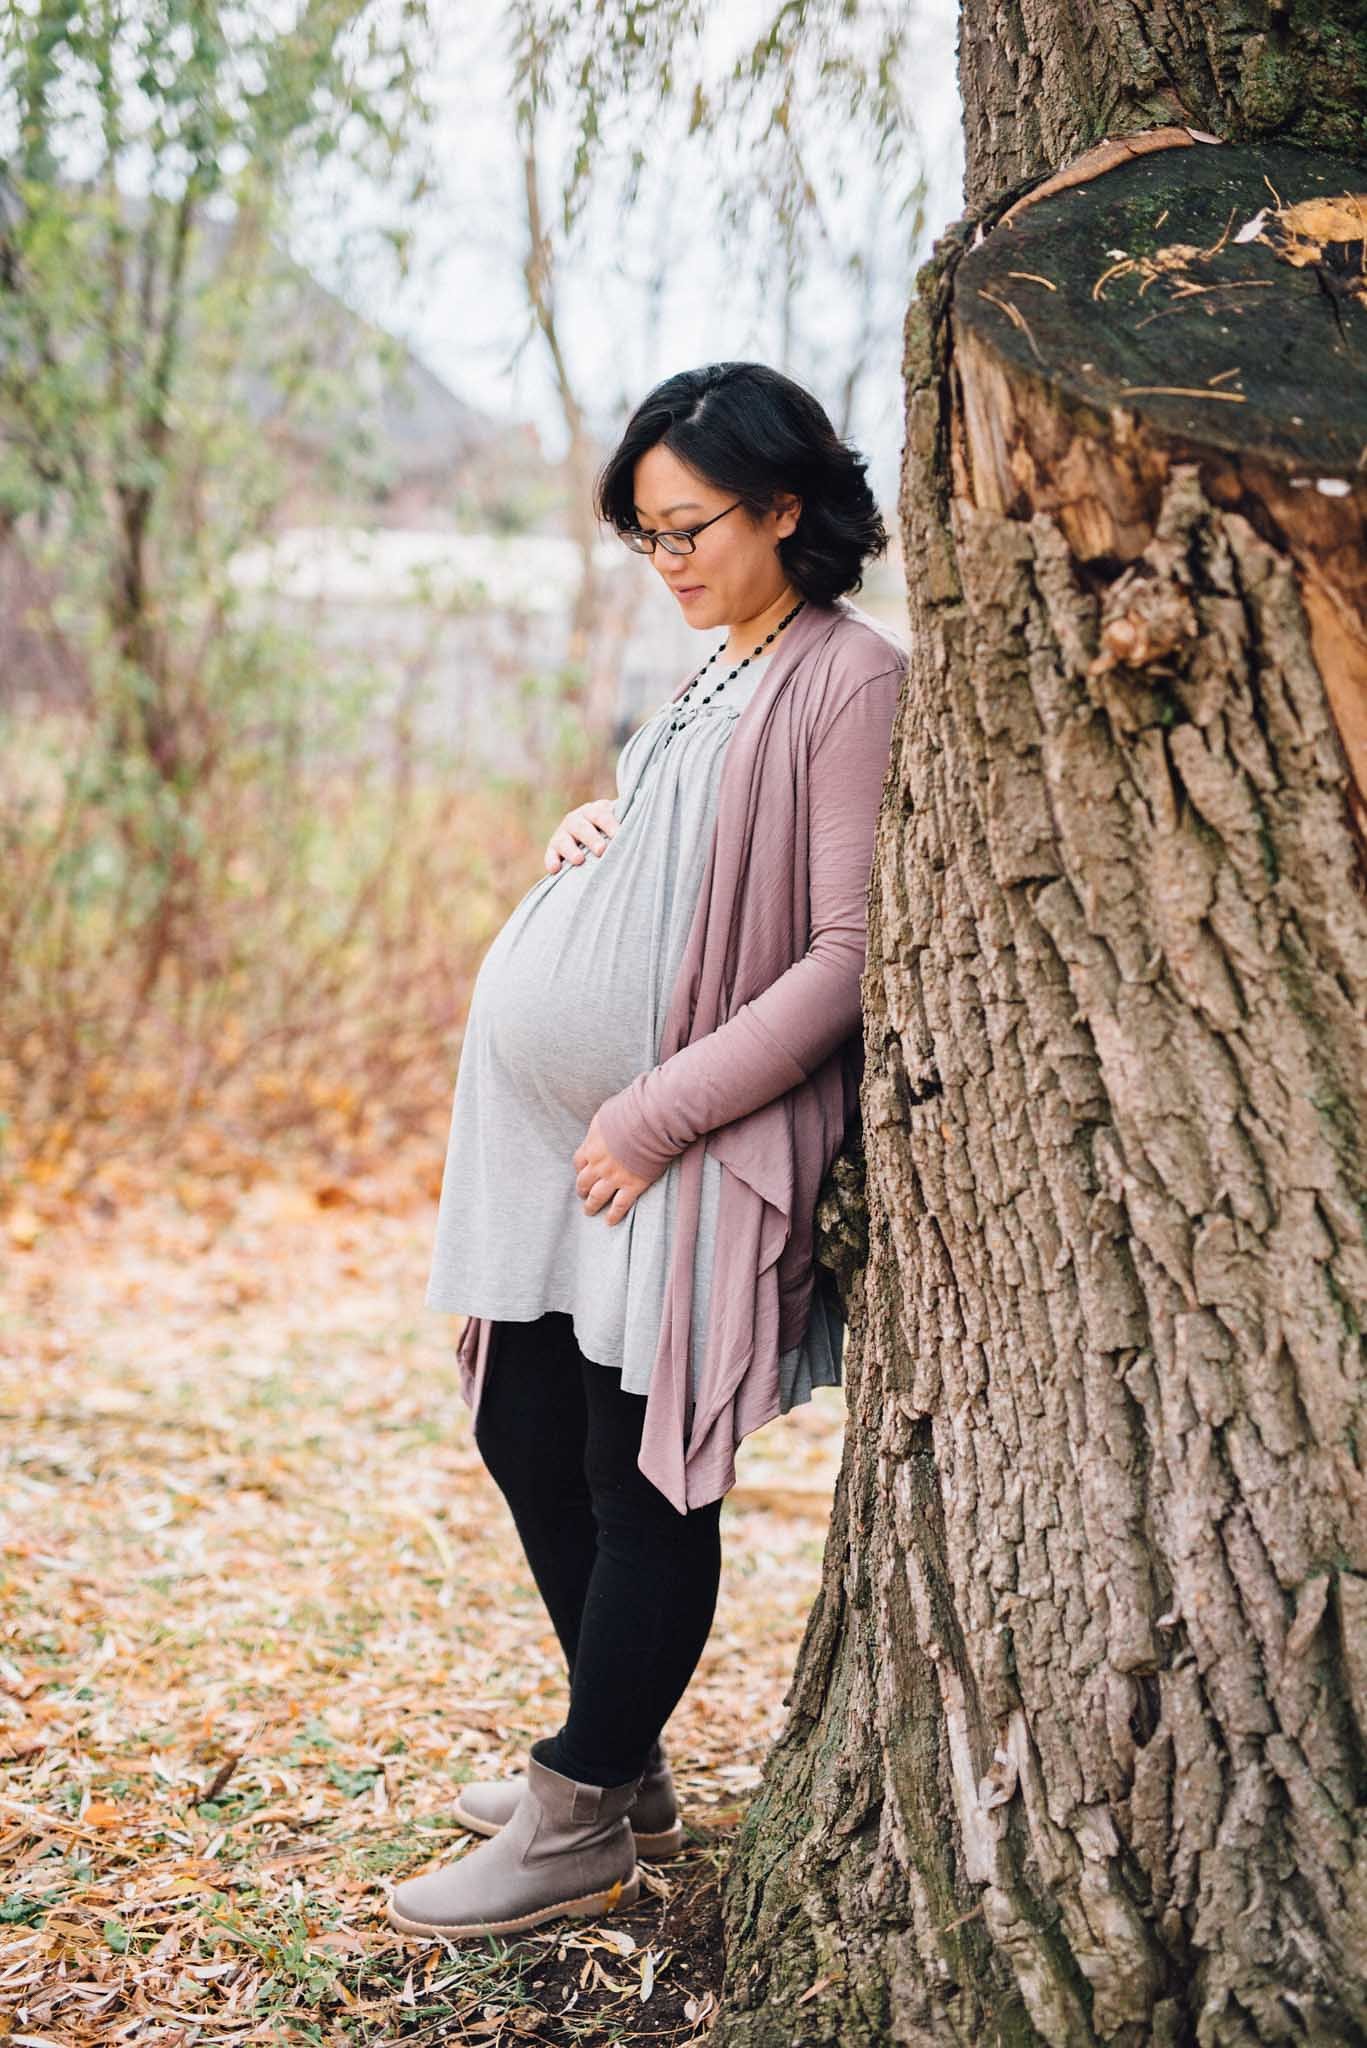 Maternity photographer Toronto | Olive Photography